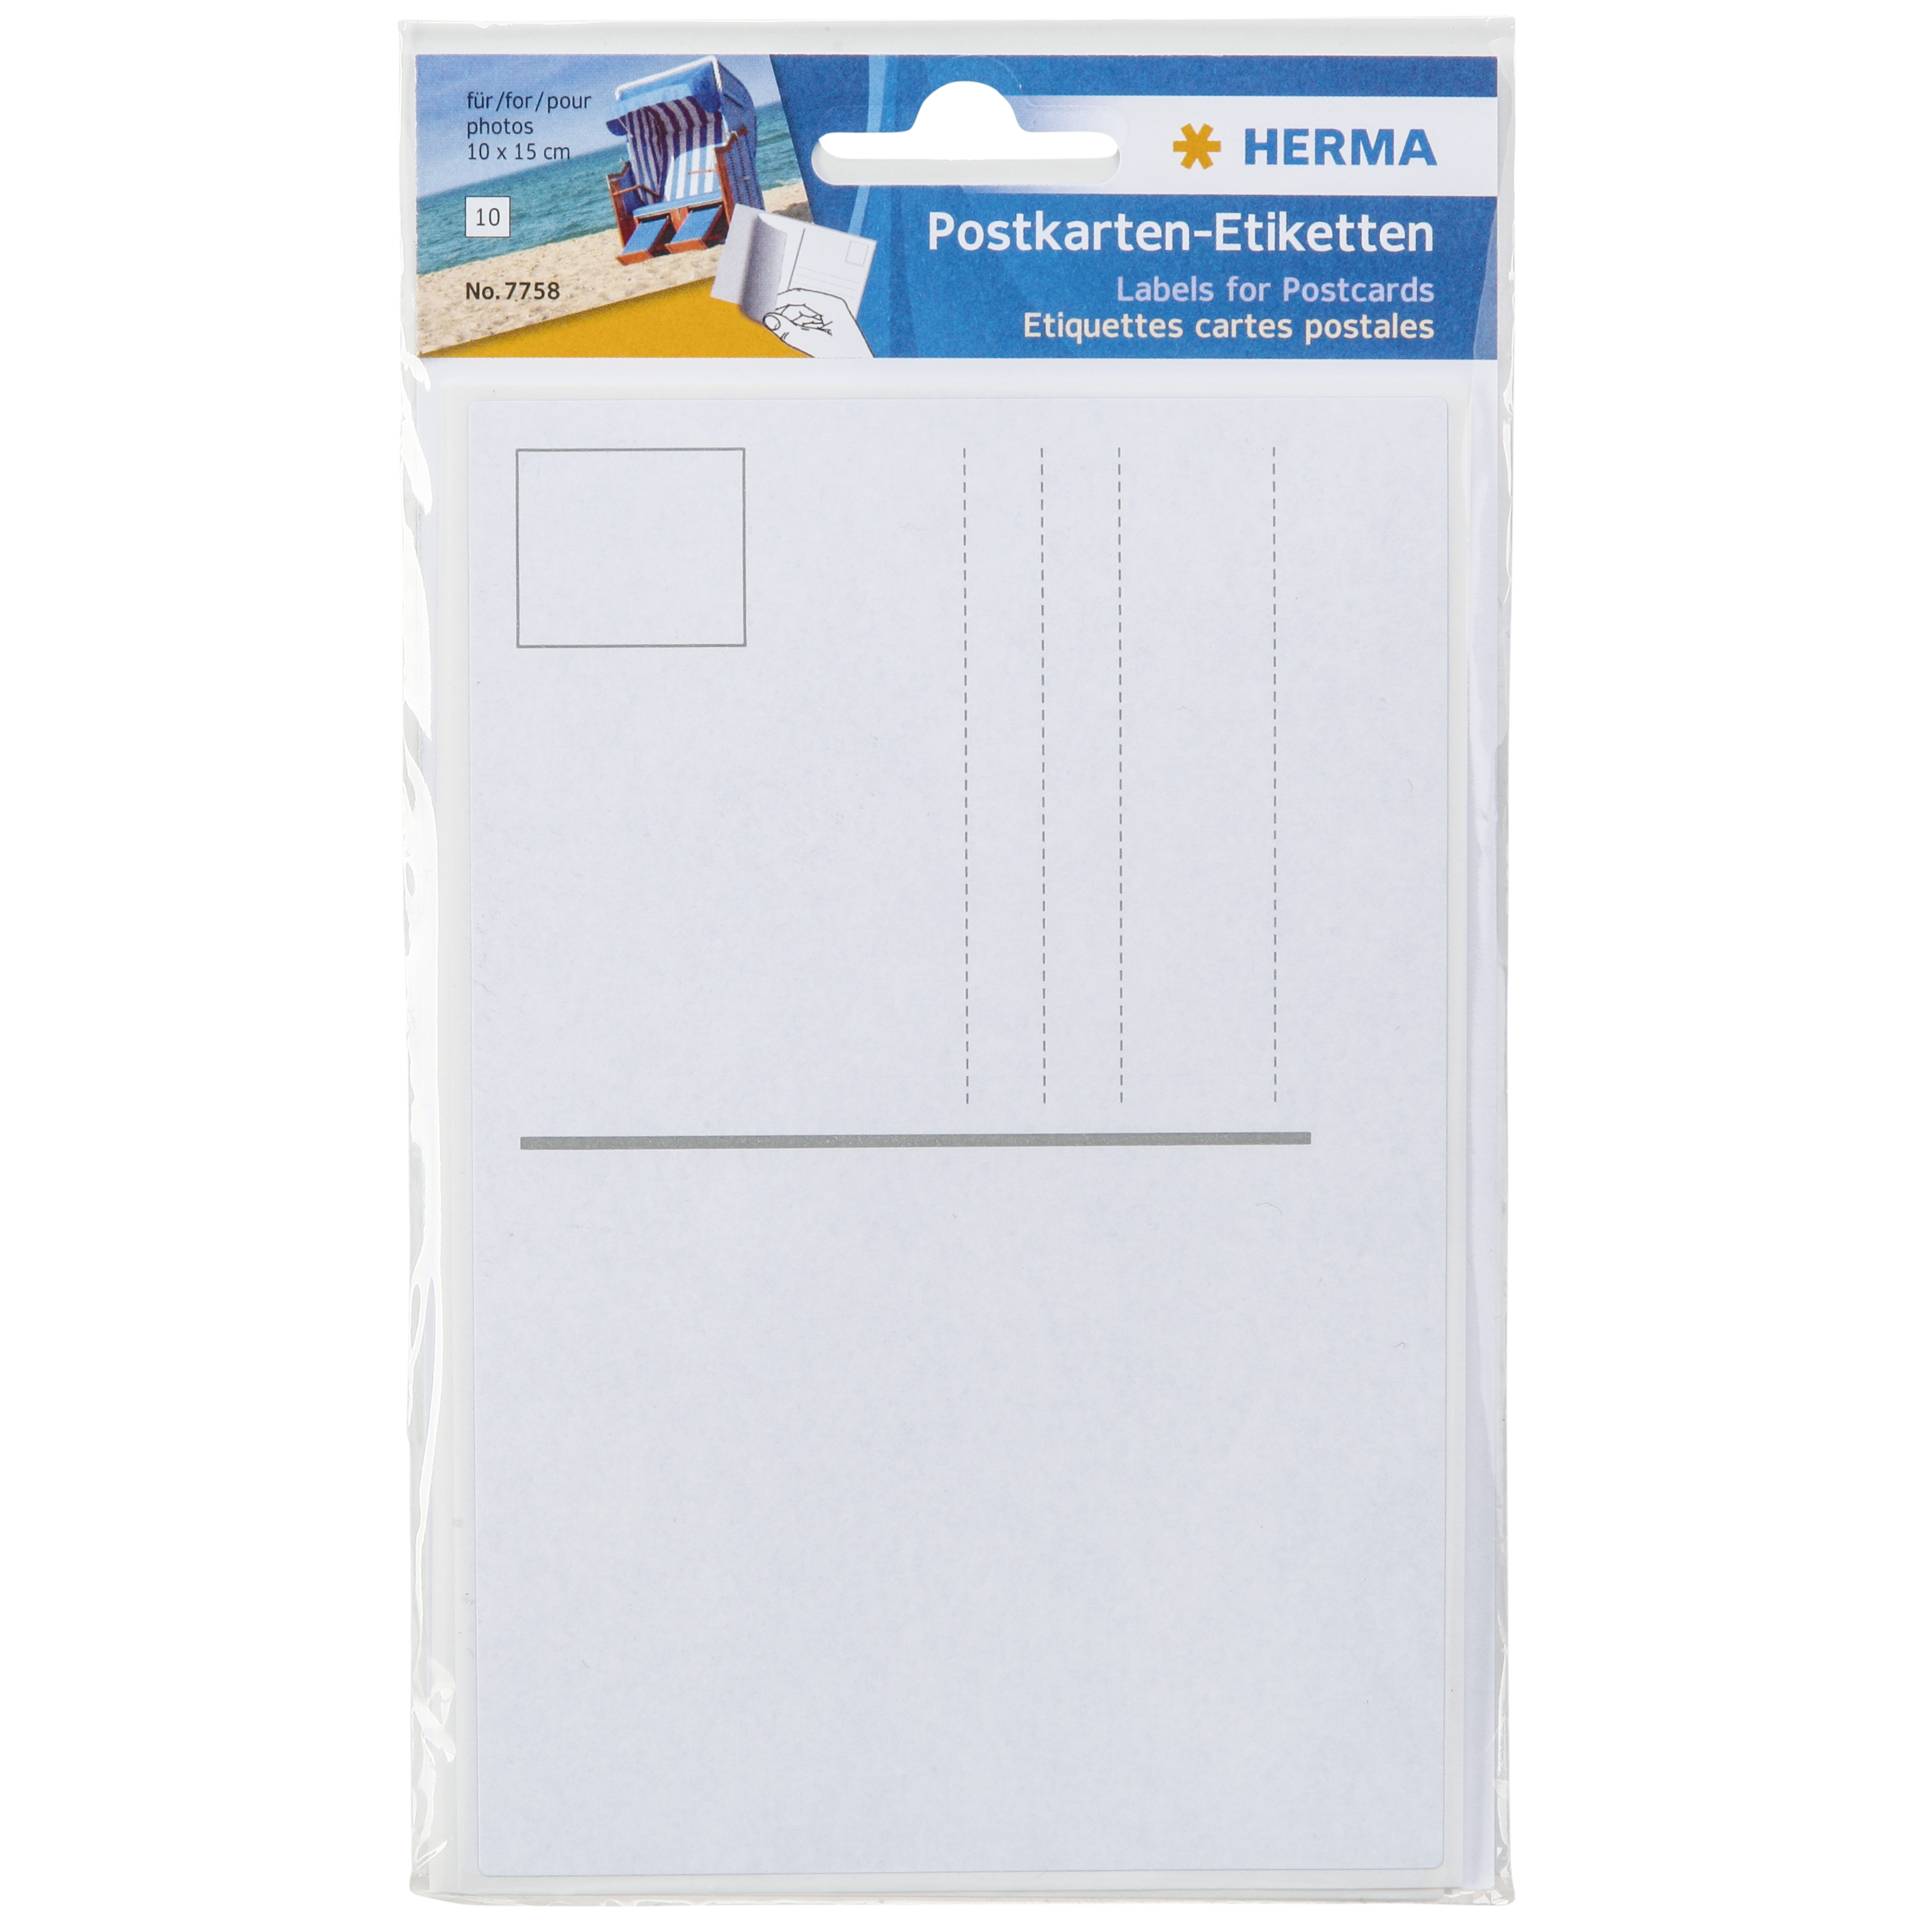 Herma etichette cartolina bianco 95x145 10 fogli